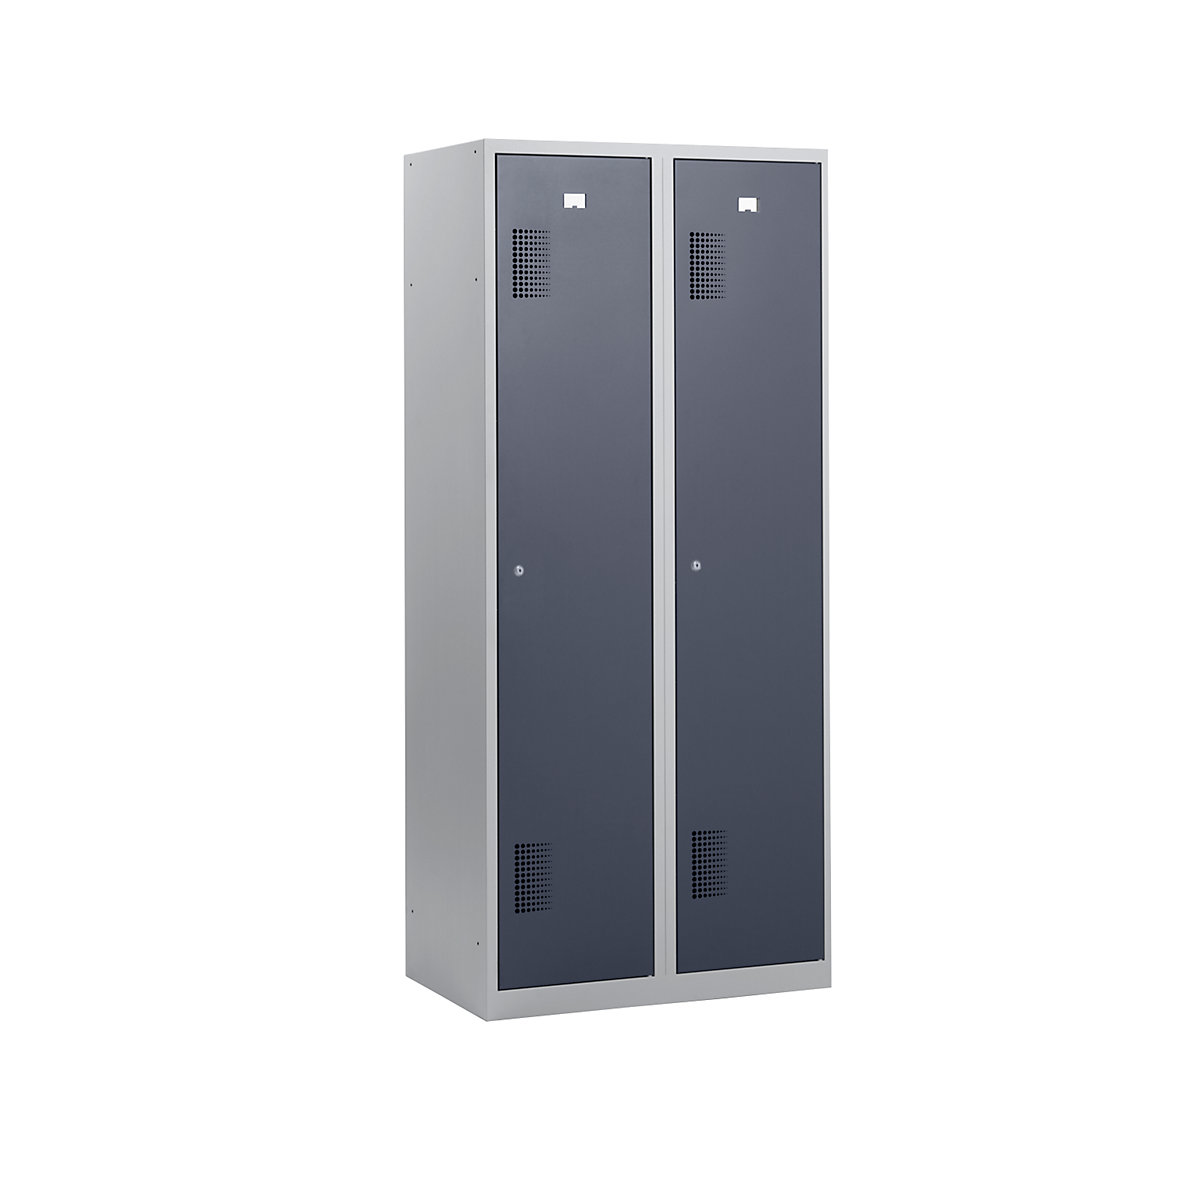 AMSTERDAM cloakroom locker – eurokraft basic, height 1800 mm, width 800 mm, 2 x 398 mm wide compartments, with cylinder lock, light grey body, basalt grey doors-9